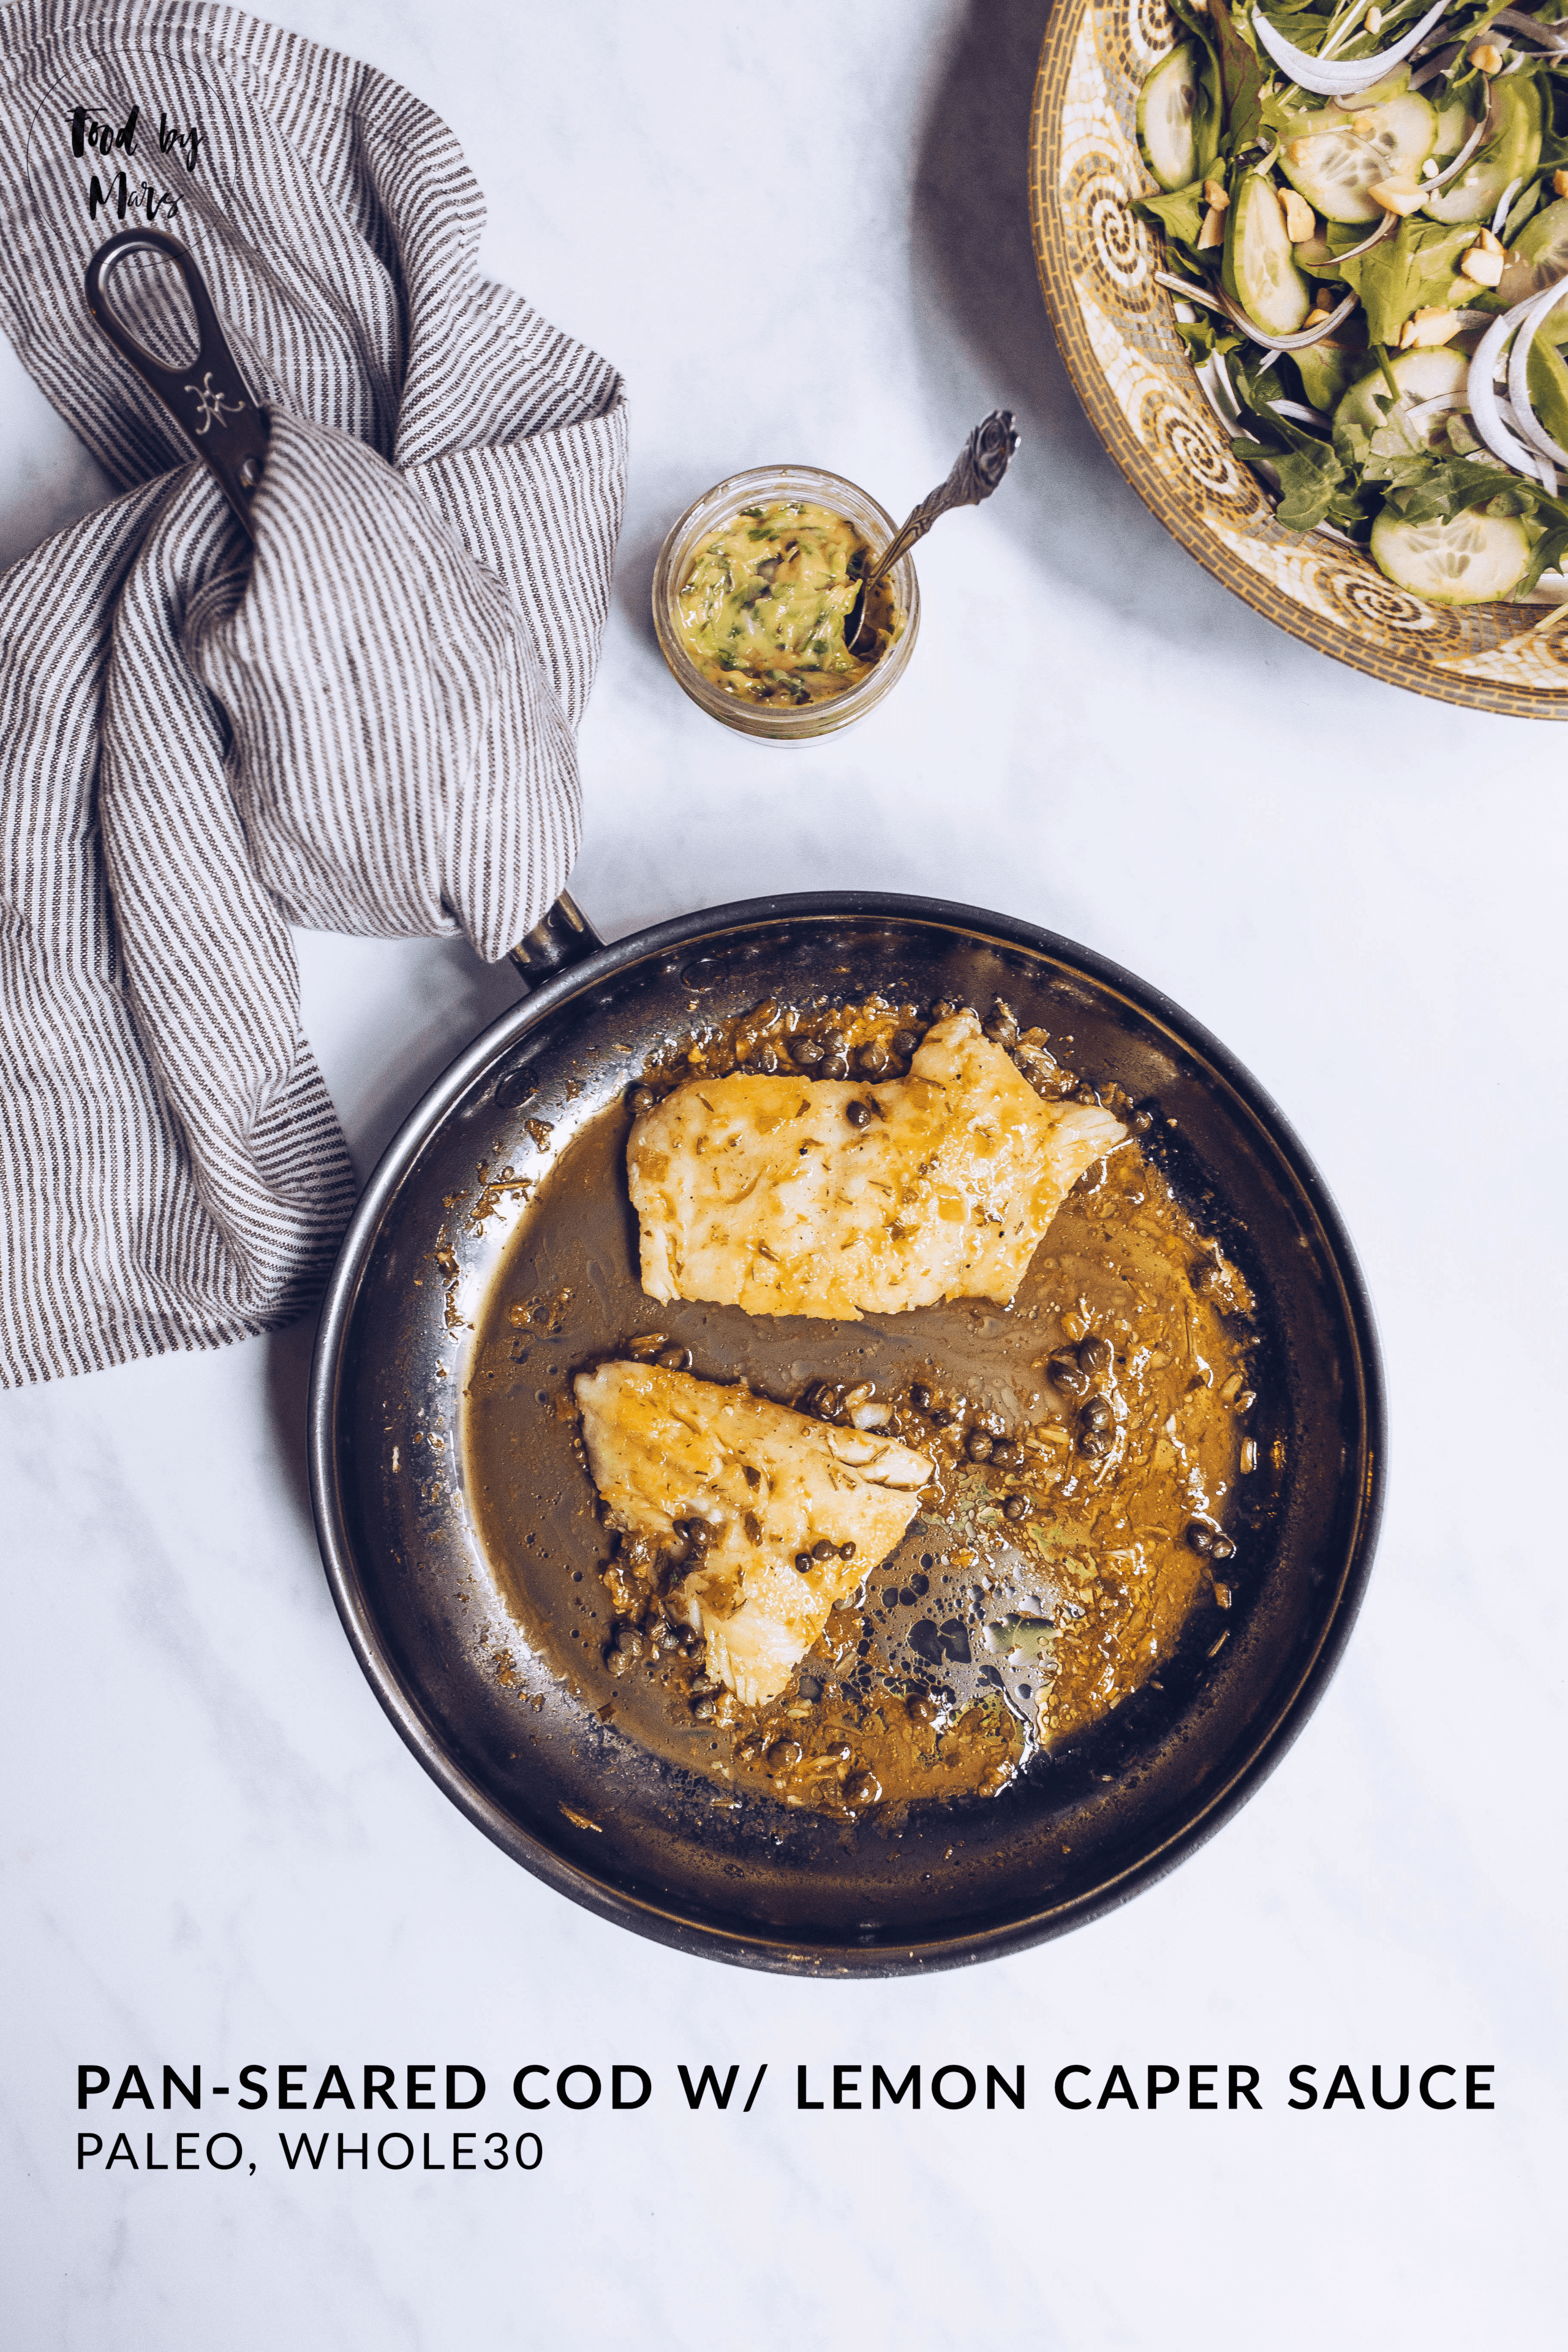 Pan-seared cod with lemon-caper sauce via Food by Mars (Paleo, Whole30)